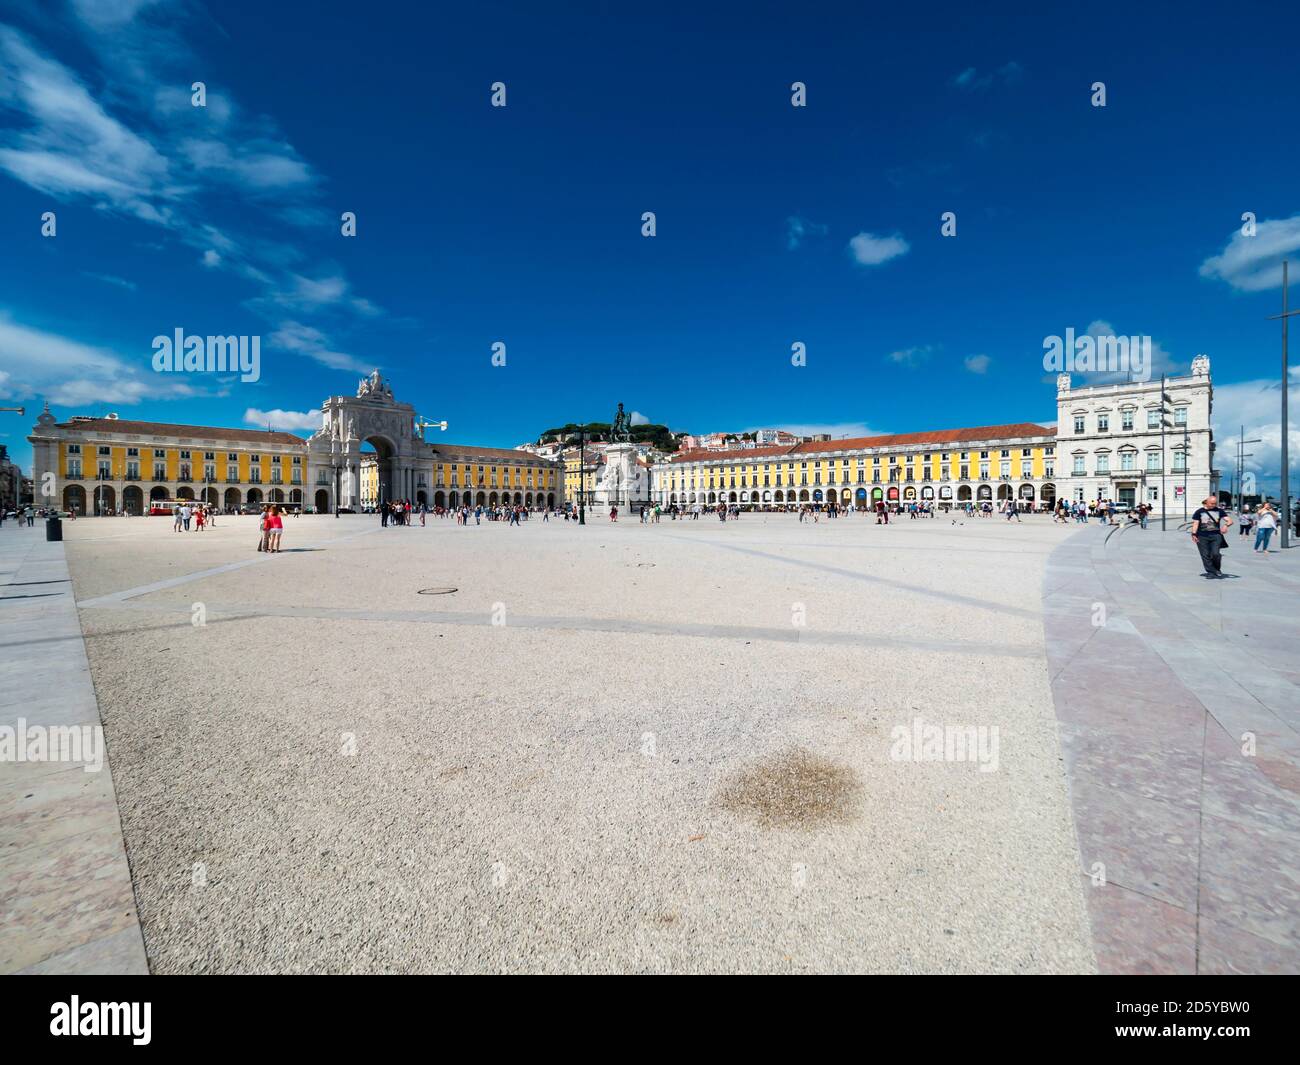 Portugal, Lisboa, Baixa, Praca do Comercio, triumphal arch Arco da Rua Augusta, equestrian statue King Jose I Stock Photo